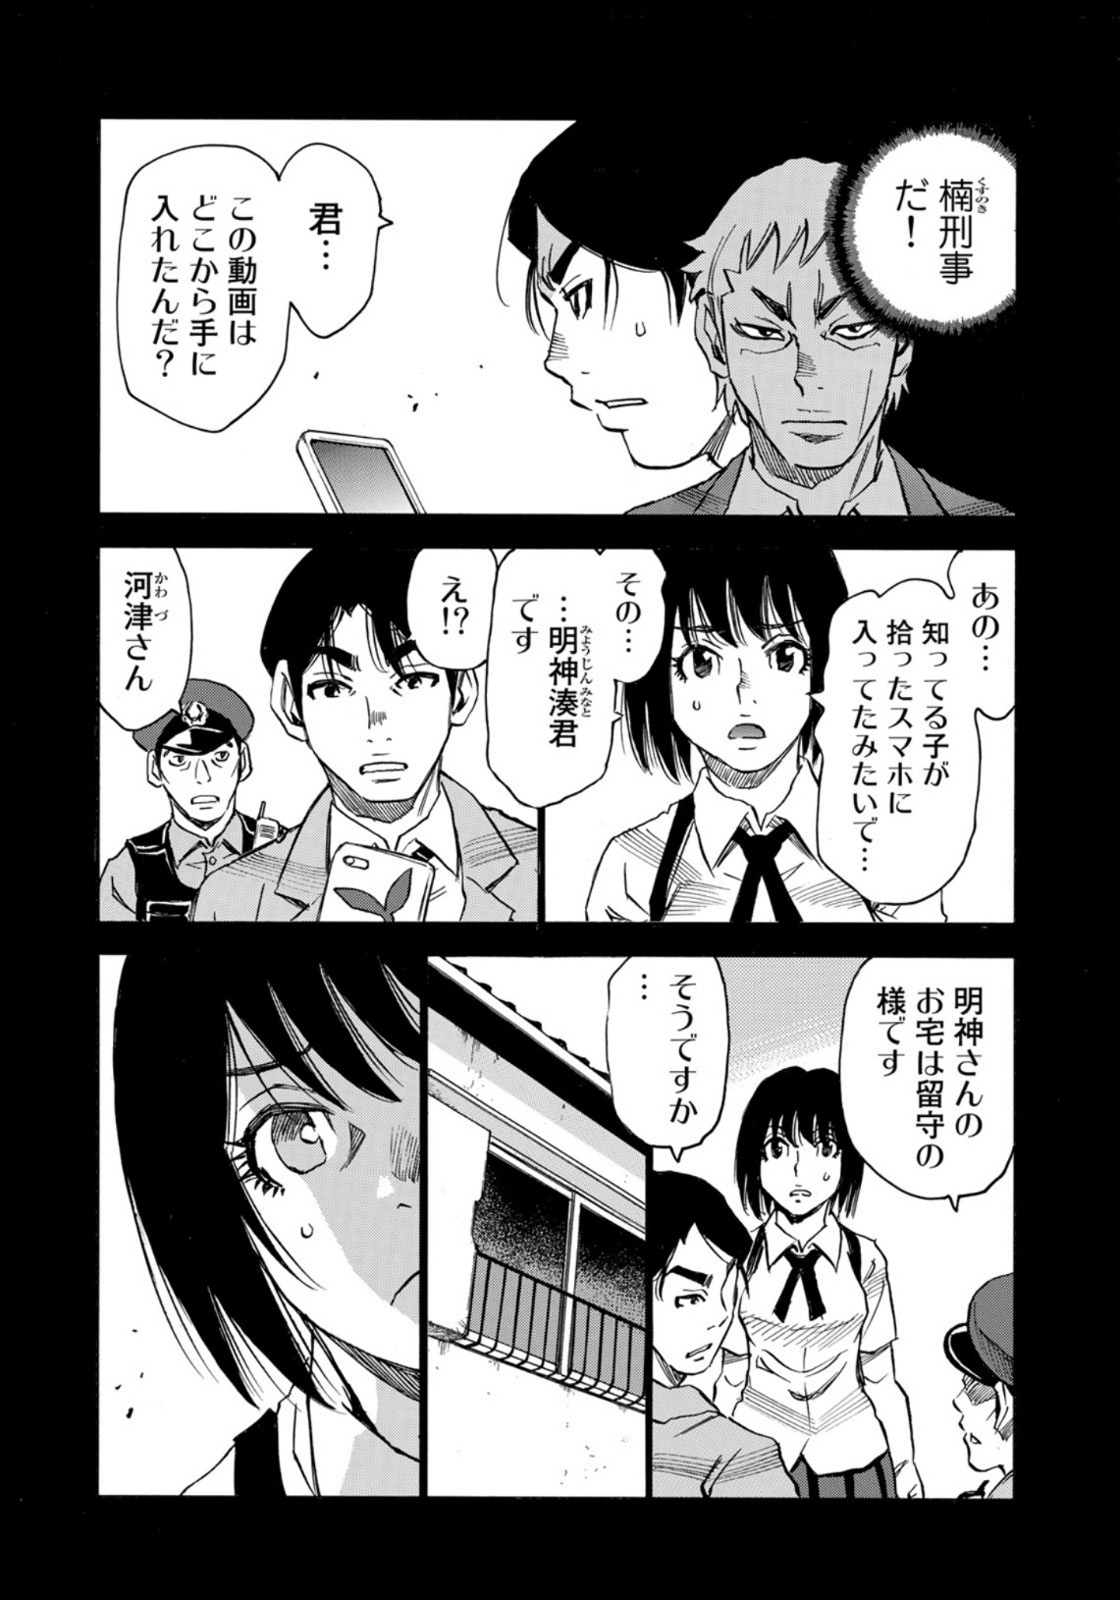 Mizutamari ni Ukabu Shima - Chapter 21.1 - Page 2